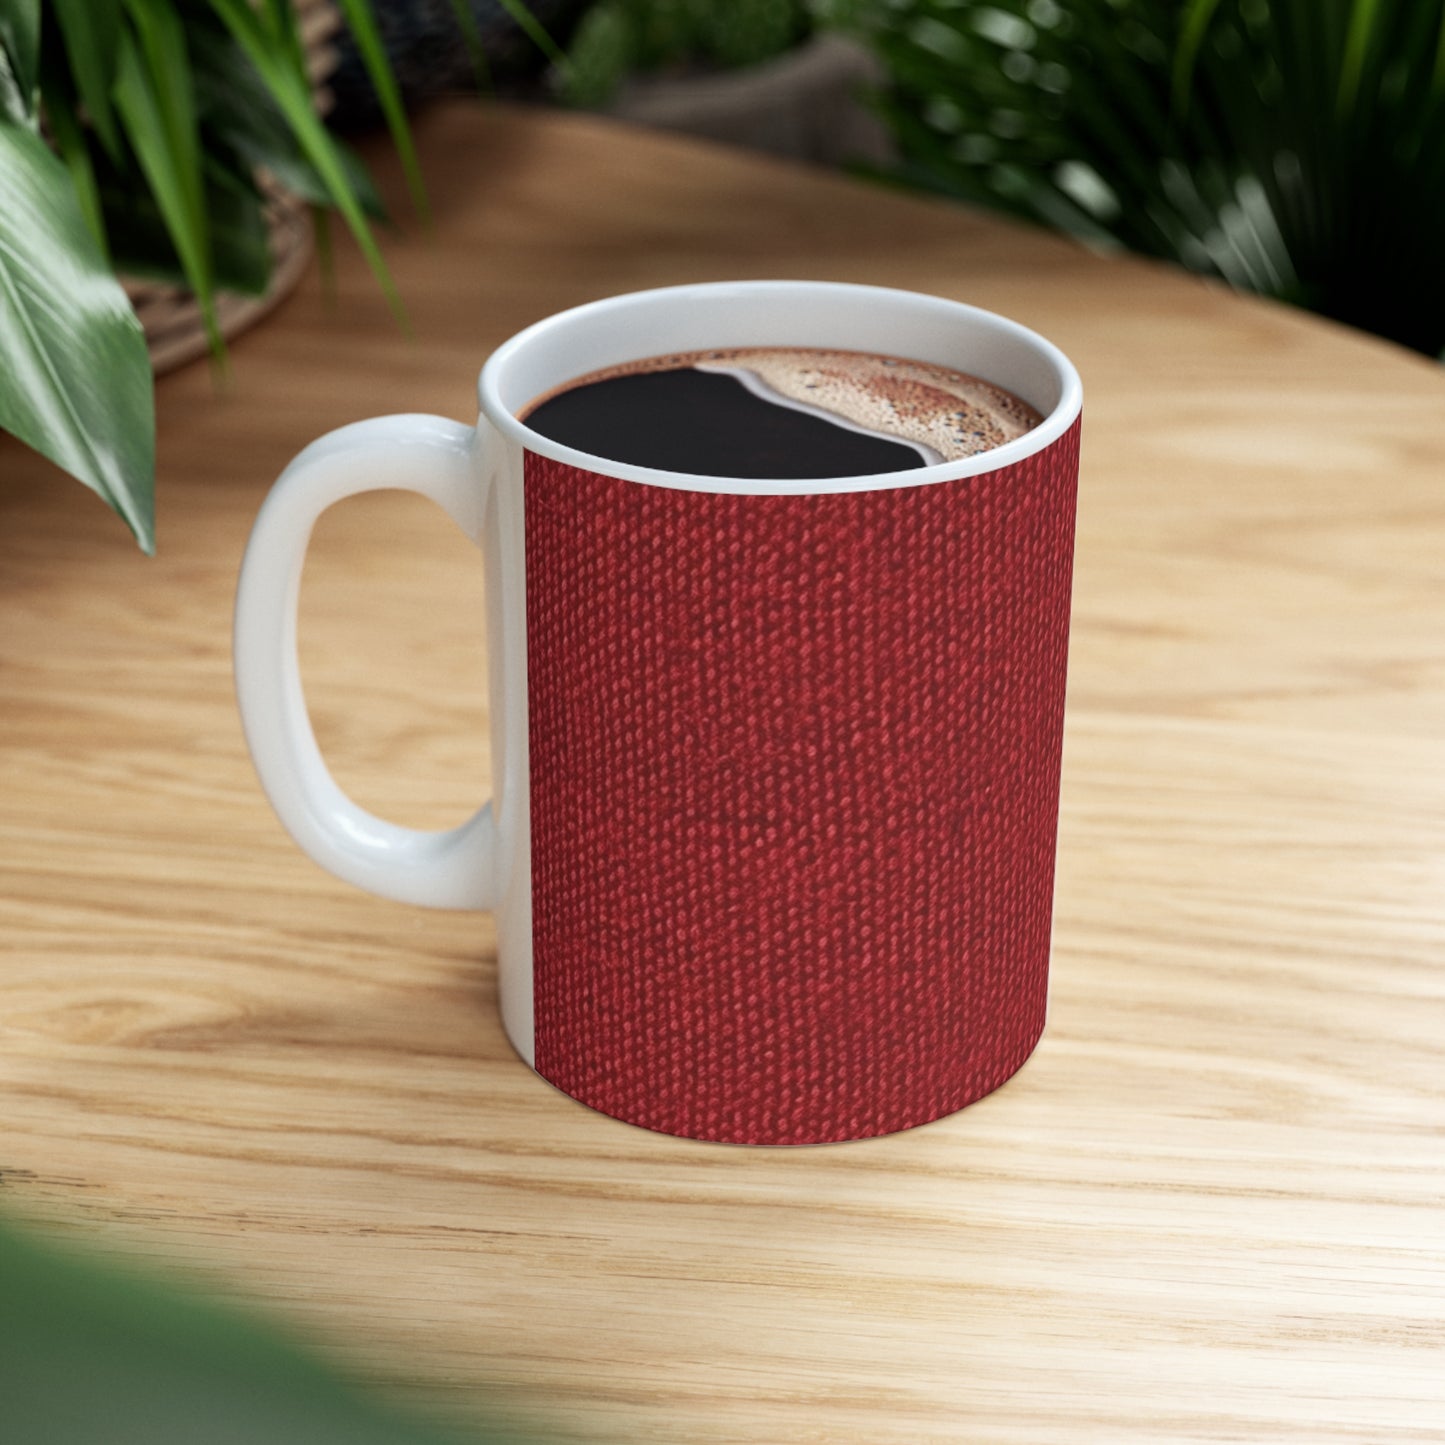 Bold Ruby Red: Denim-Inspired, Passionate Fabric Style - Ceramic Mug 11oz